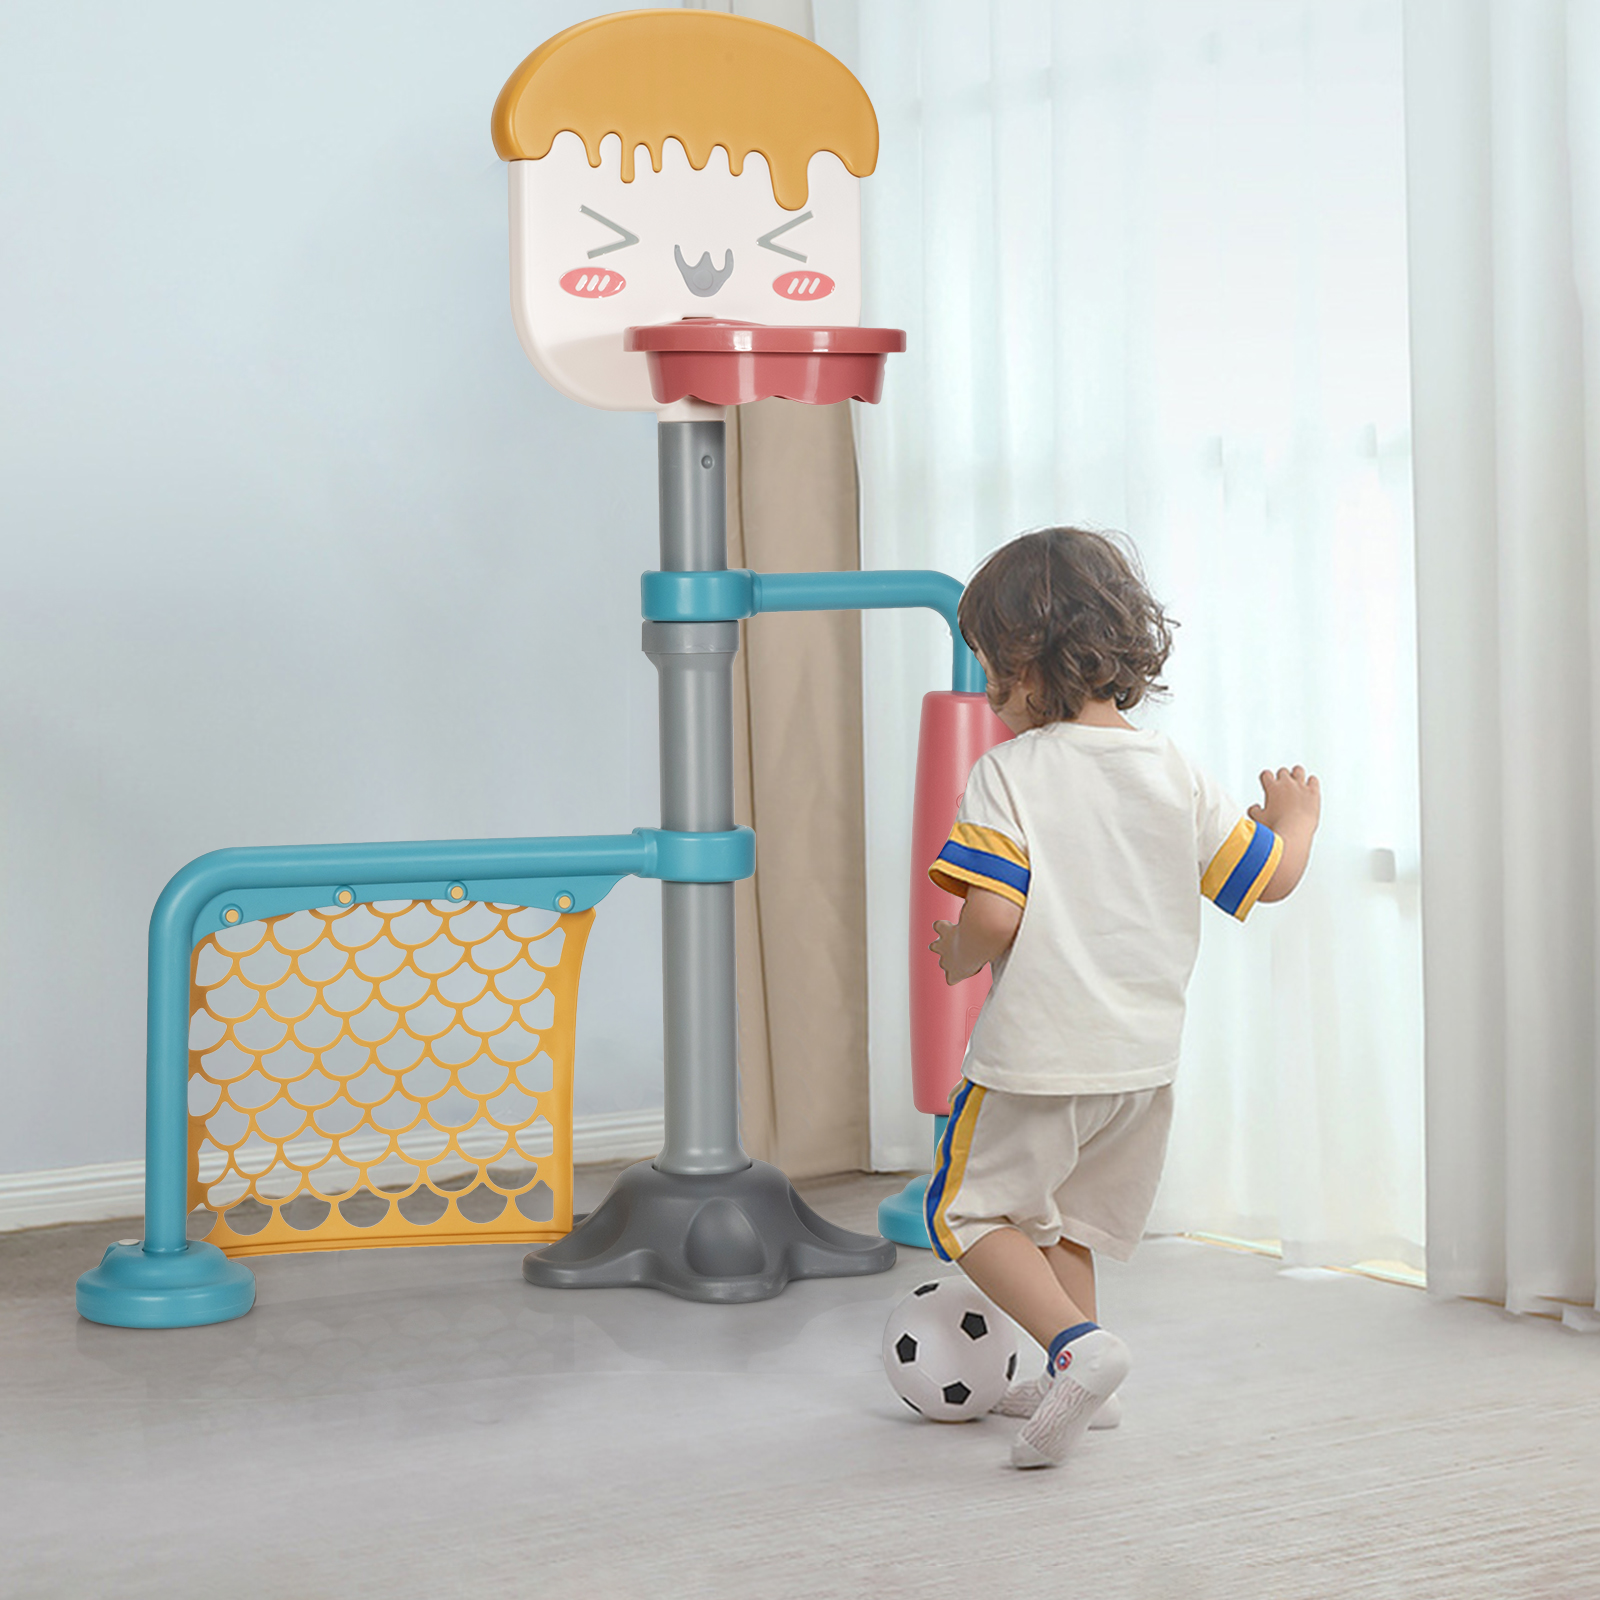 Topbuy Adjustable Ice Cream Kids Basketball Stand Set Soccer Goal Stand Kids Game Set Indoor&Outdoor